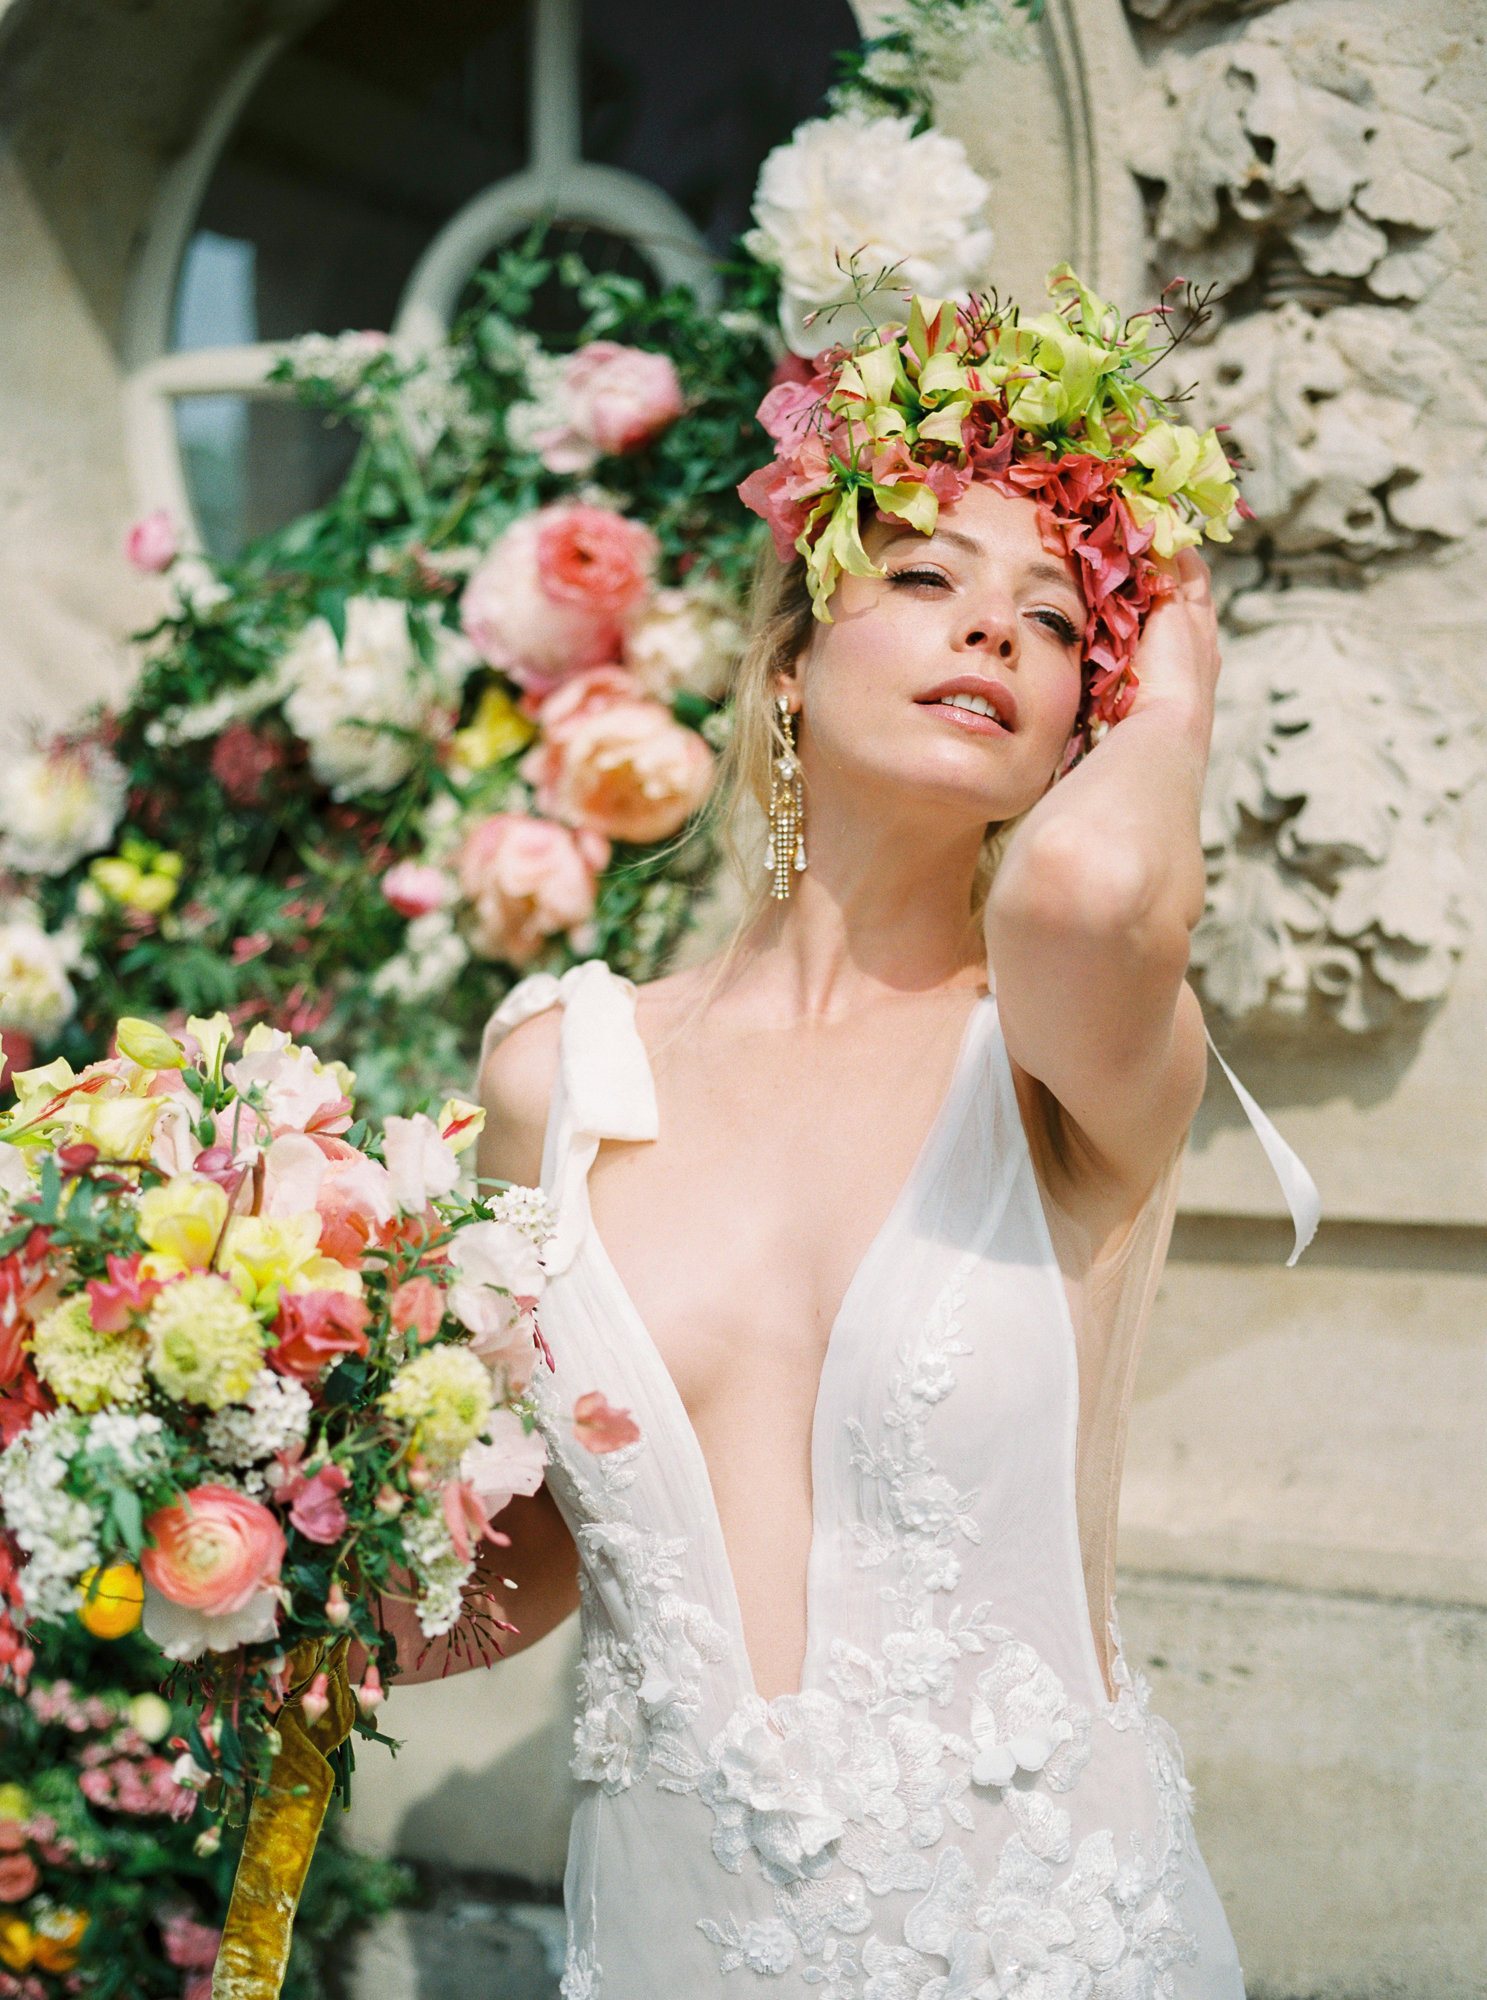 travellur_photoshoot__summer_in_versailles_wedding_flowers_bridal_luxe_shoot_floral_france_bride.jpg